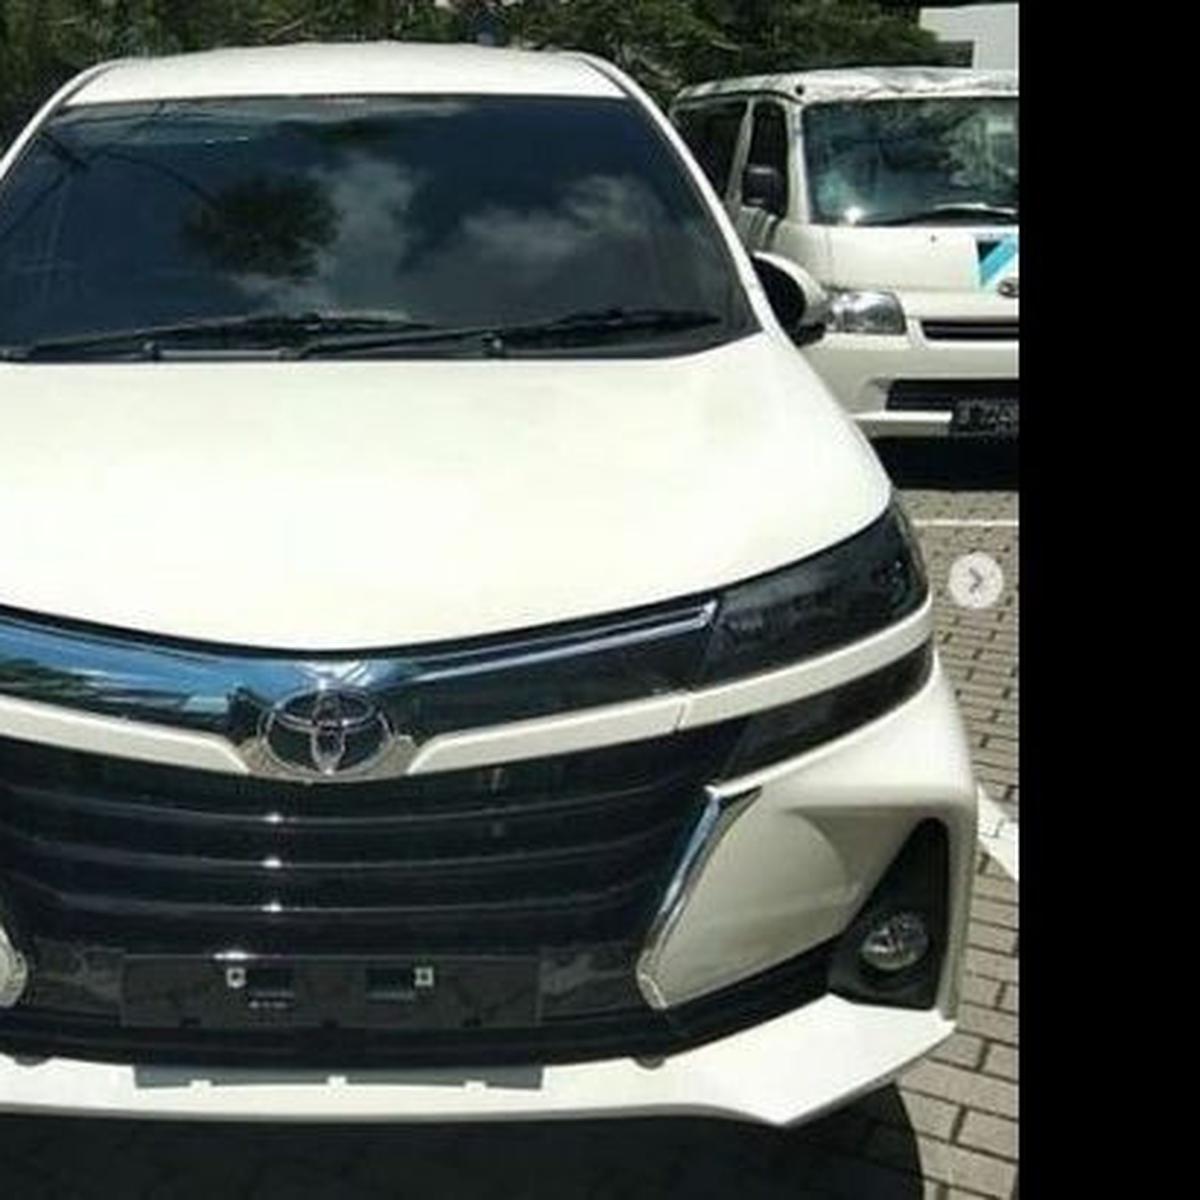 Daftar Harga Toyota Avanza Per Januari 2019 Otomotif Liputan6com